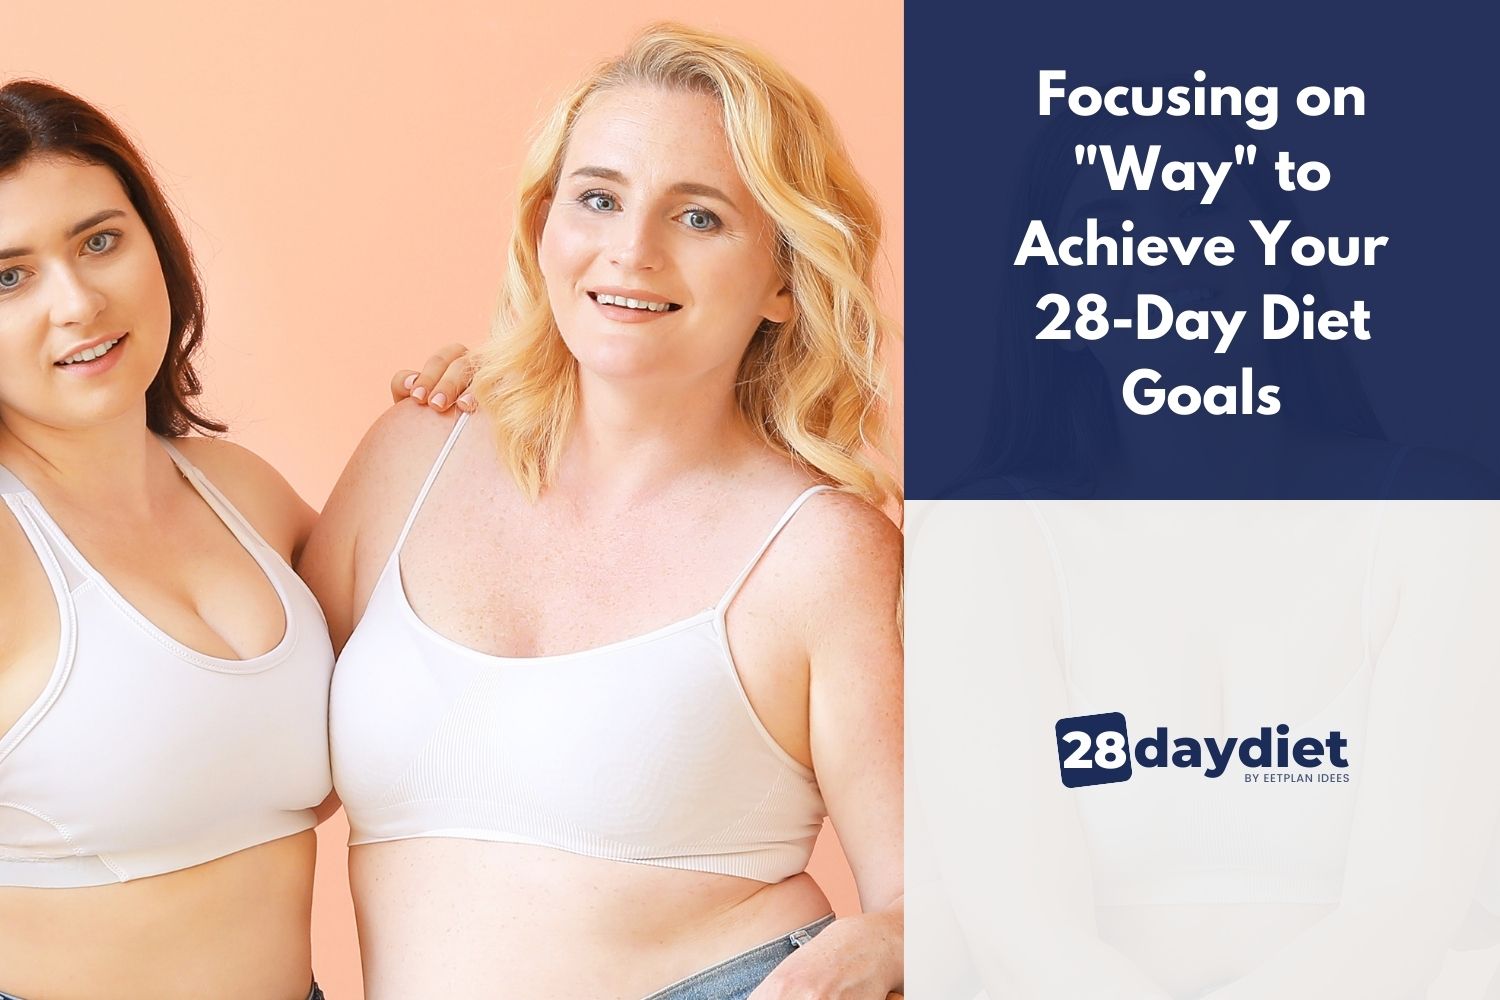 Focusing on “Way” to Achieve Your 28-Day Diet Goals